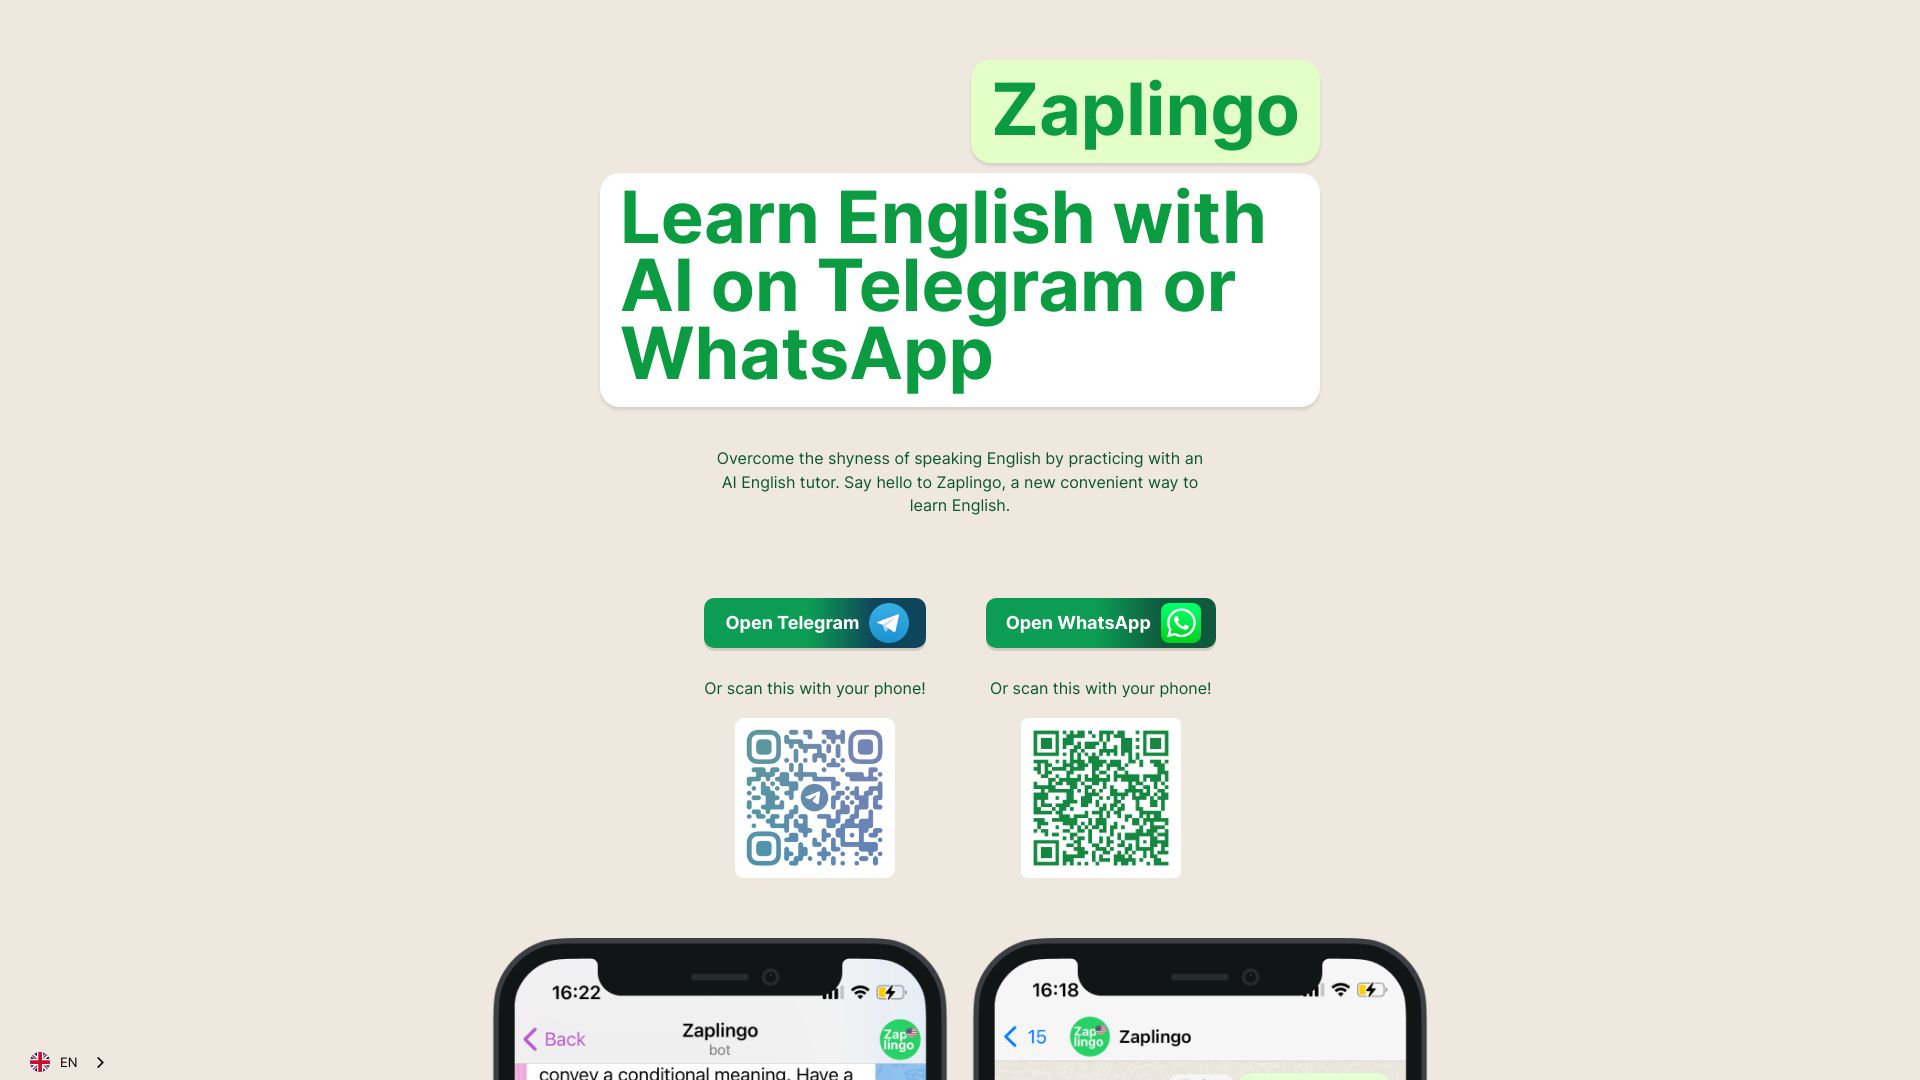 Zaplingo homepage image